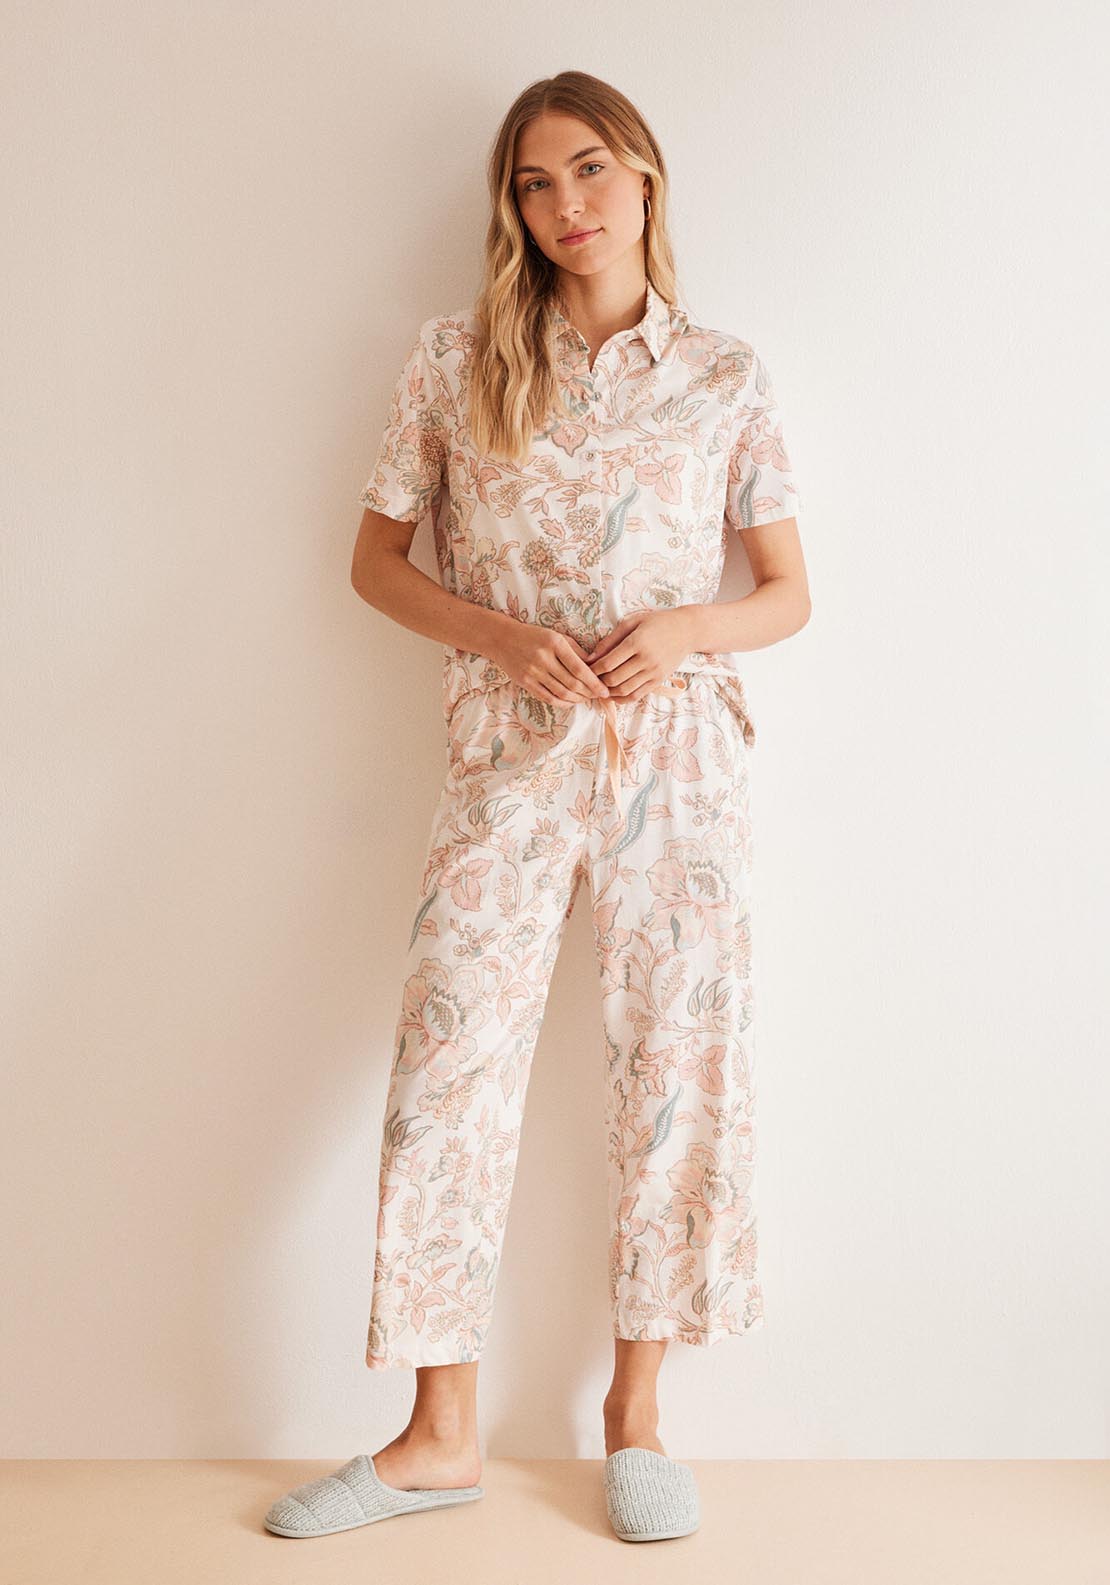 Womens Secret Classic floral print pyjamas in 100% cotton - White 1 Shaws Department Stores